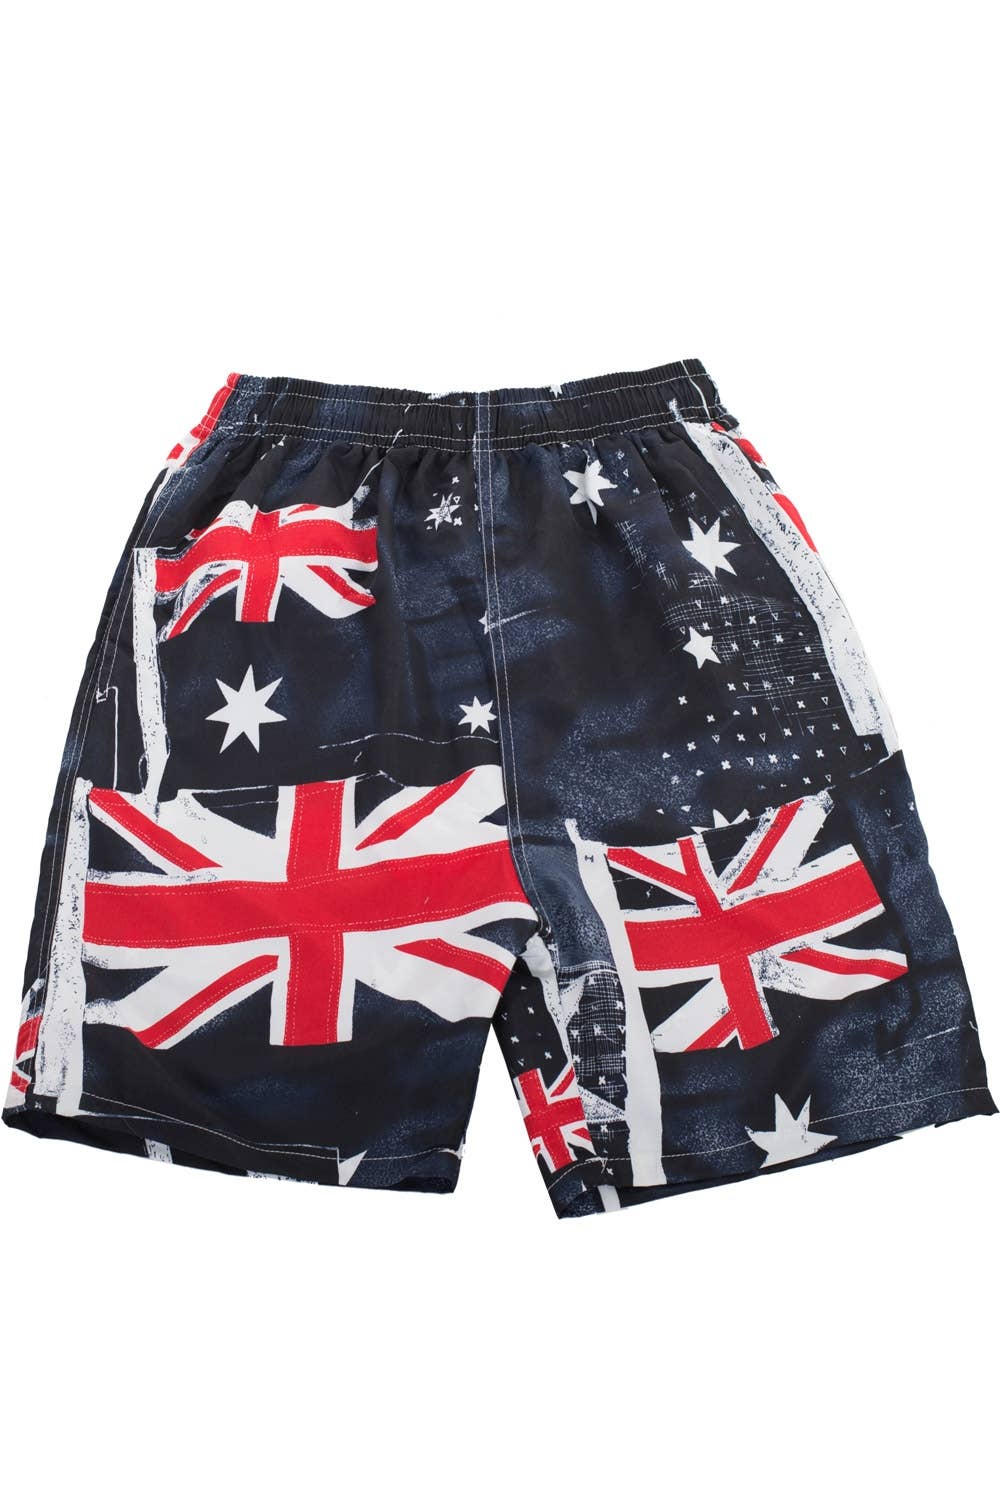 Men's Aussie Flag Australia Day Board Shorts - Main Image